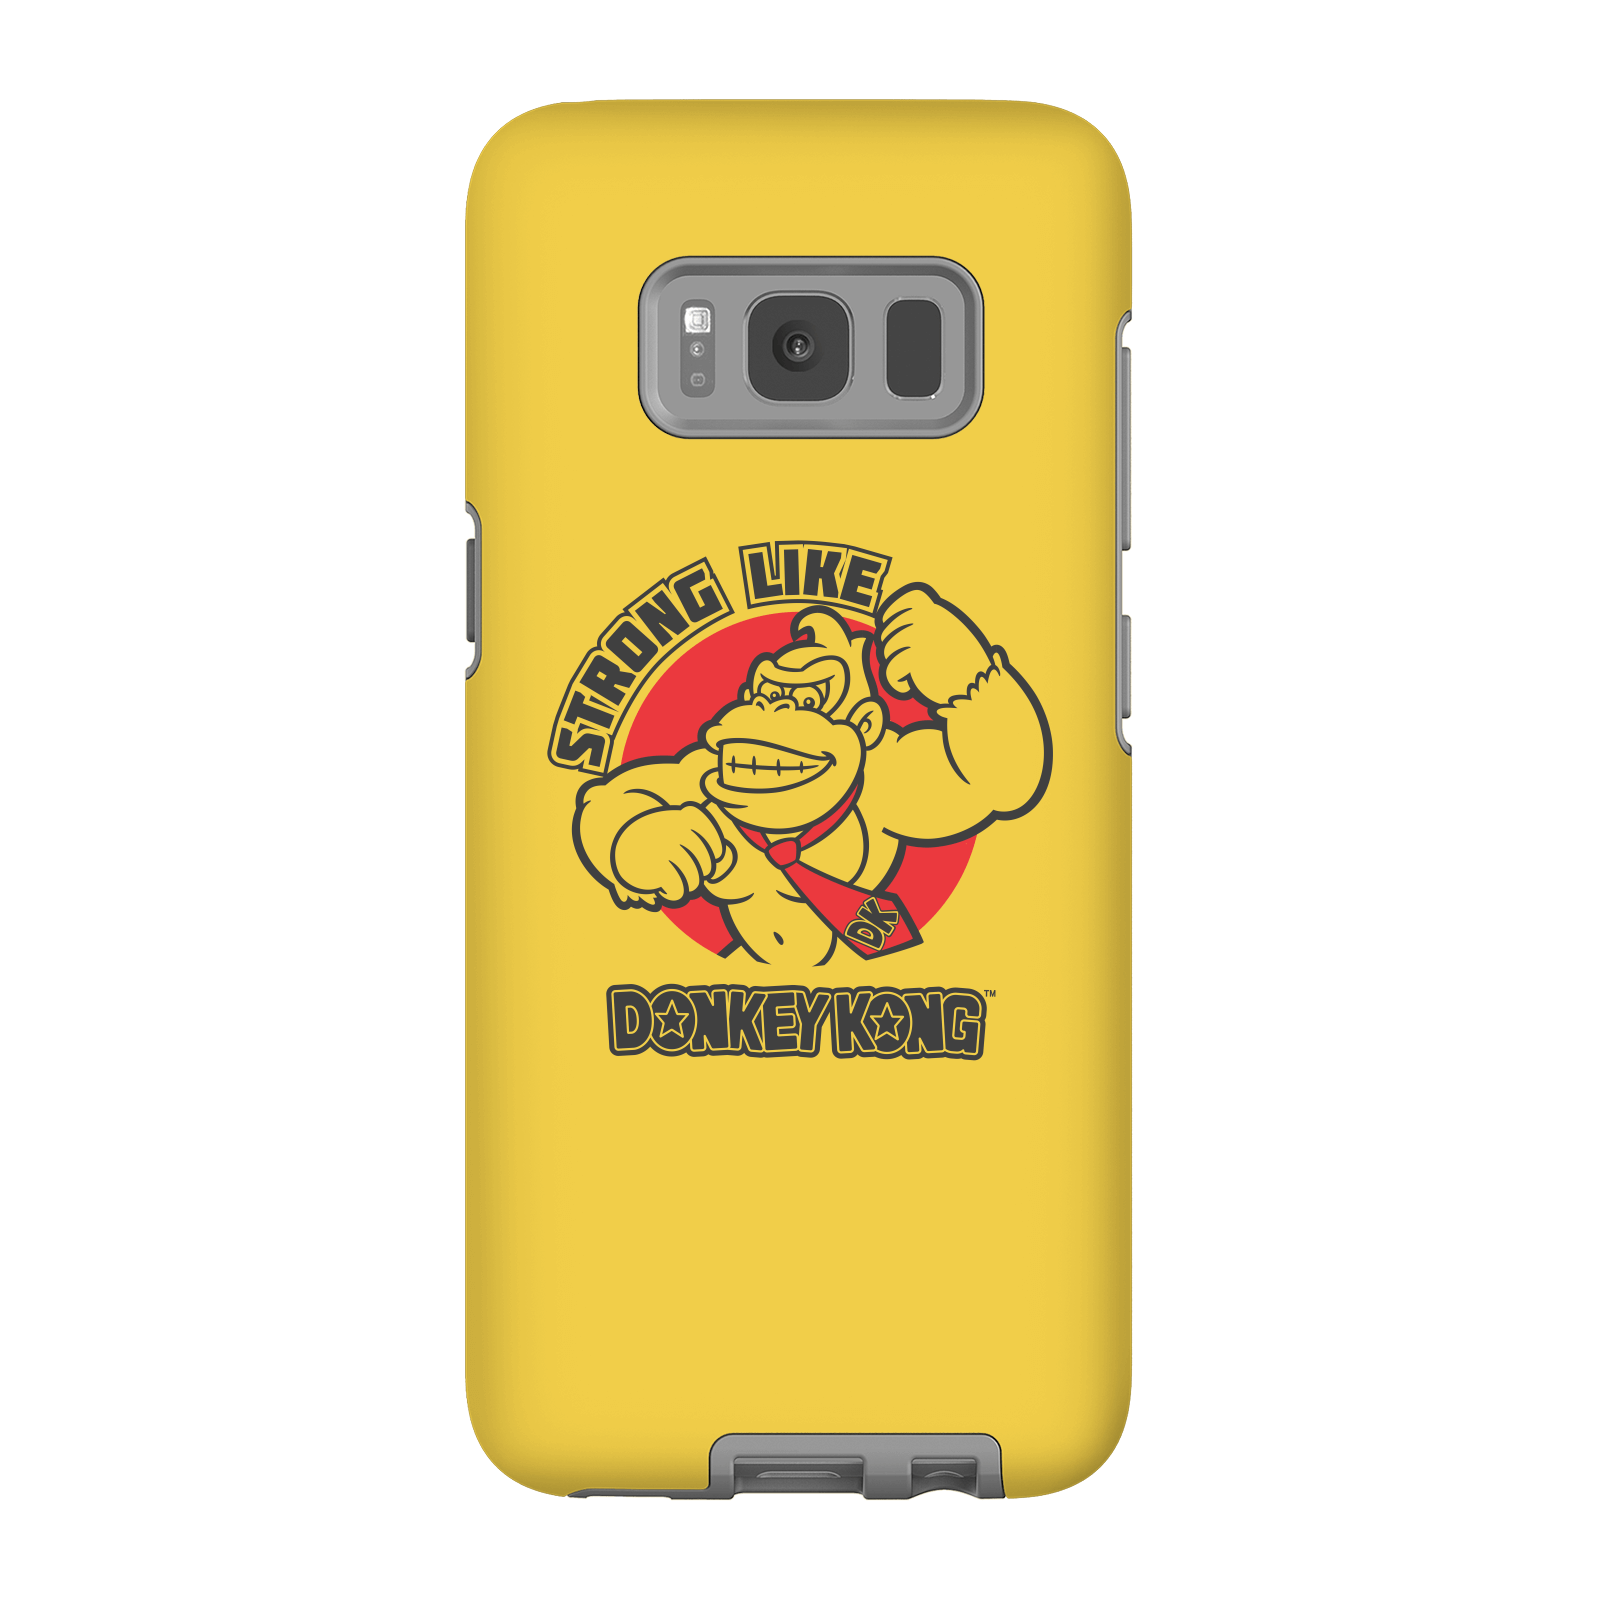 Nintendo Donkey Kong Strong Like Donkey Kong Phone Case - Samsung S8 - Tough Case - Matte